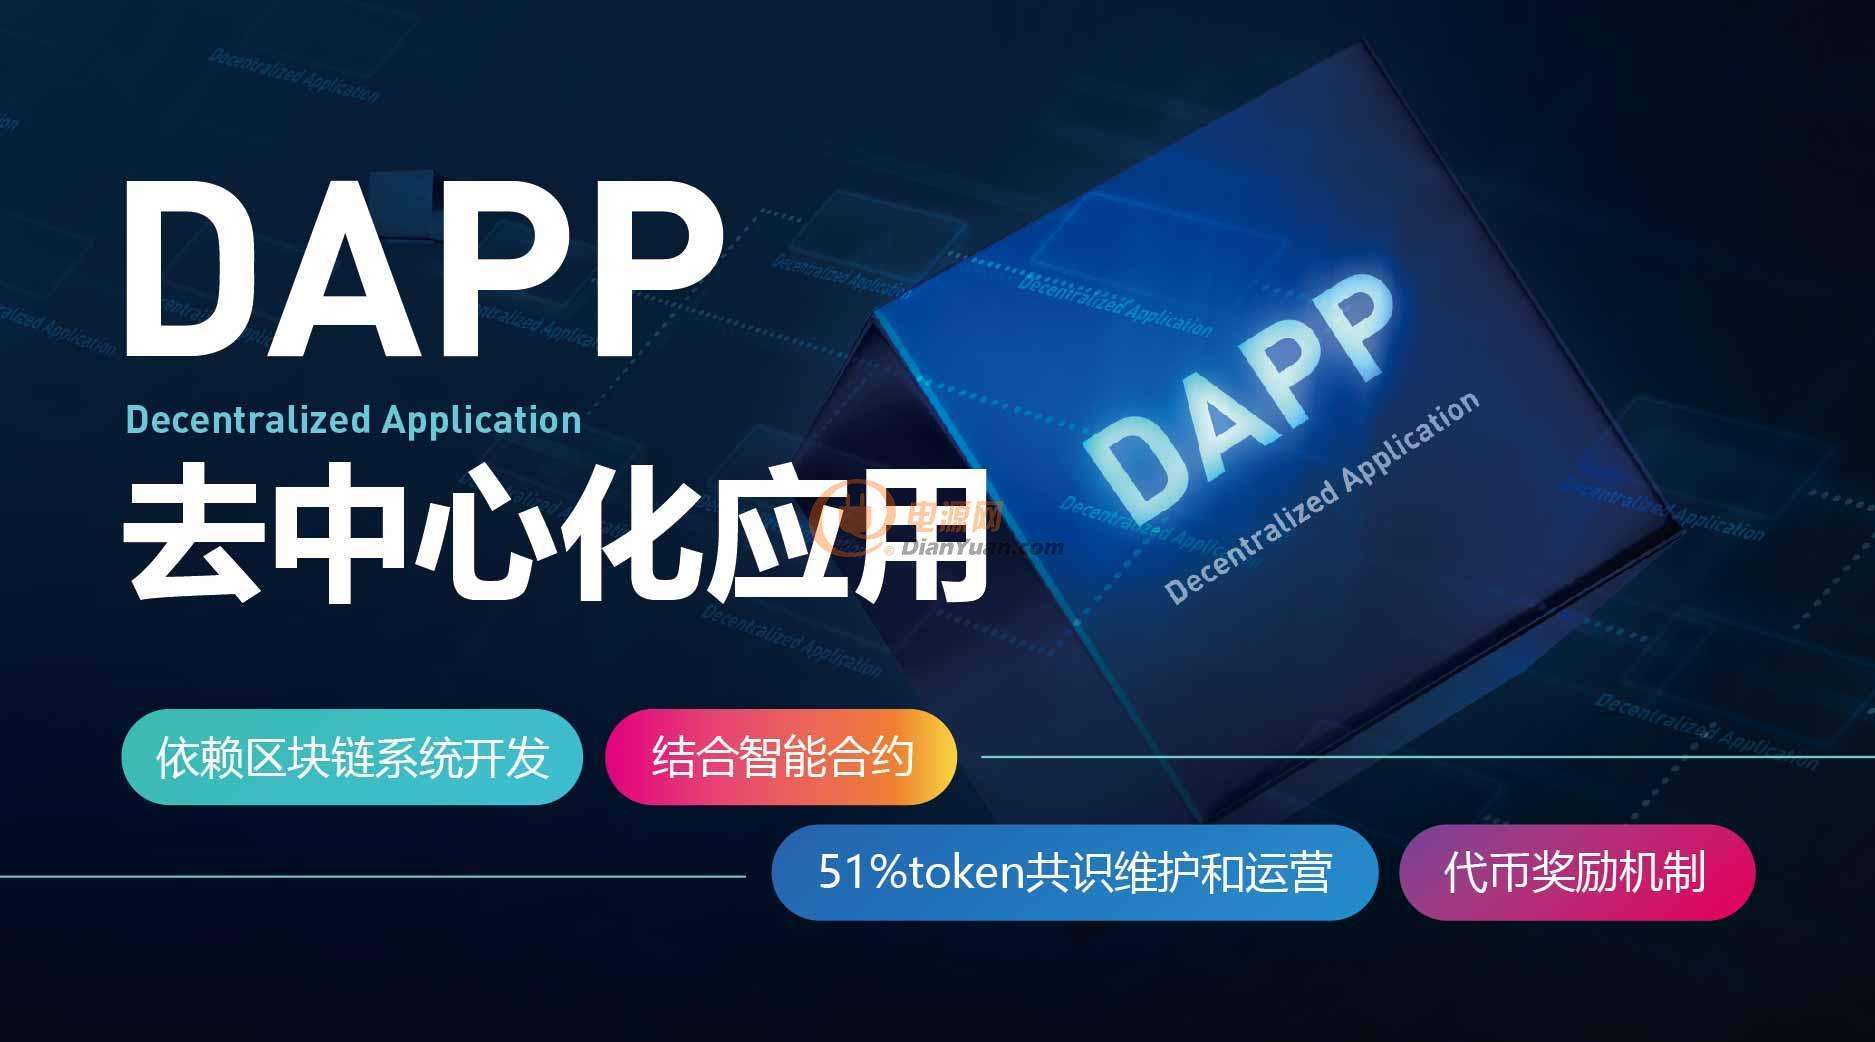 DAPP开发:区块链平台、设计智能合约、创建用户界面等